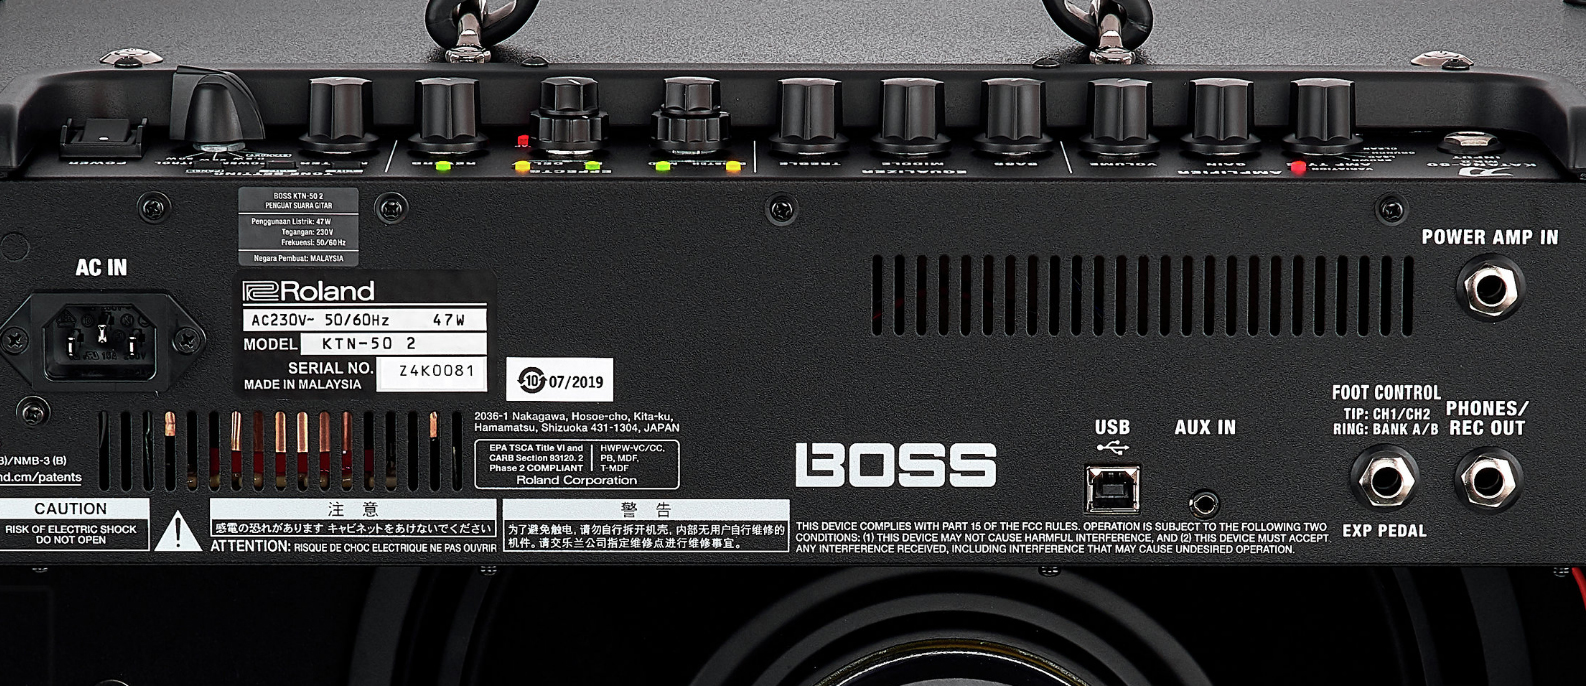 Boss Katana-50 Mkii 0.5/25/50w 1x12 - Combo amplificador para guitarra eléctrica - Variation 4